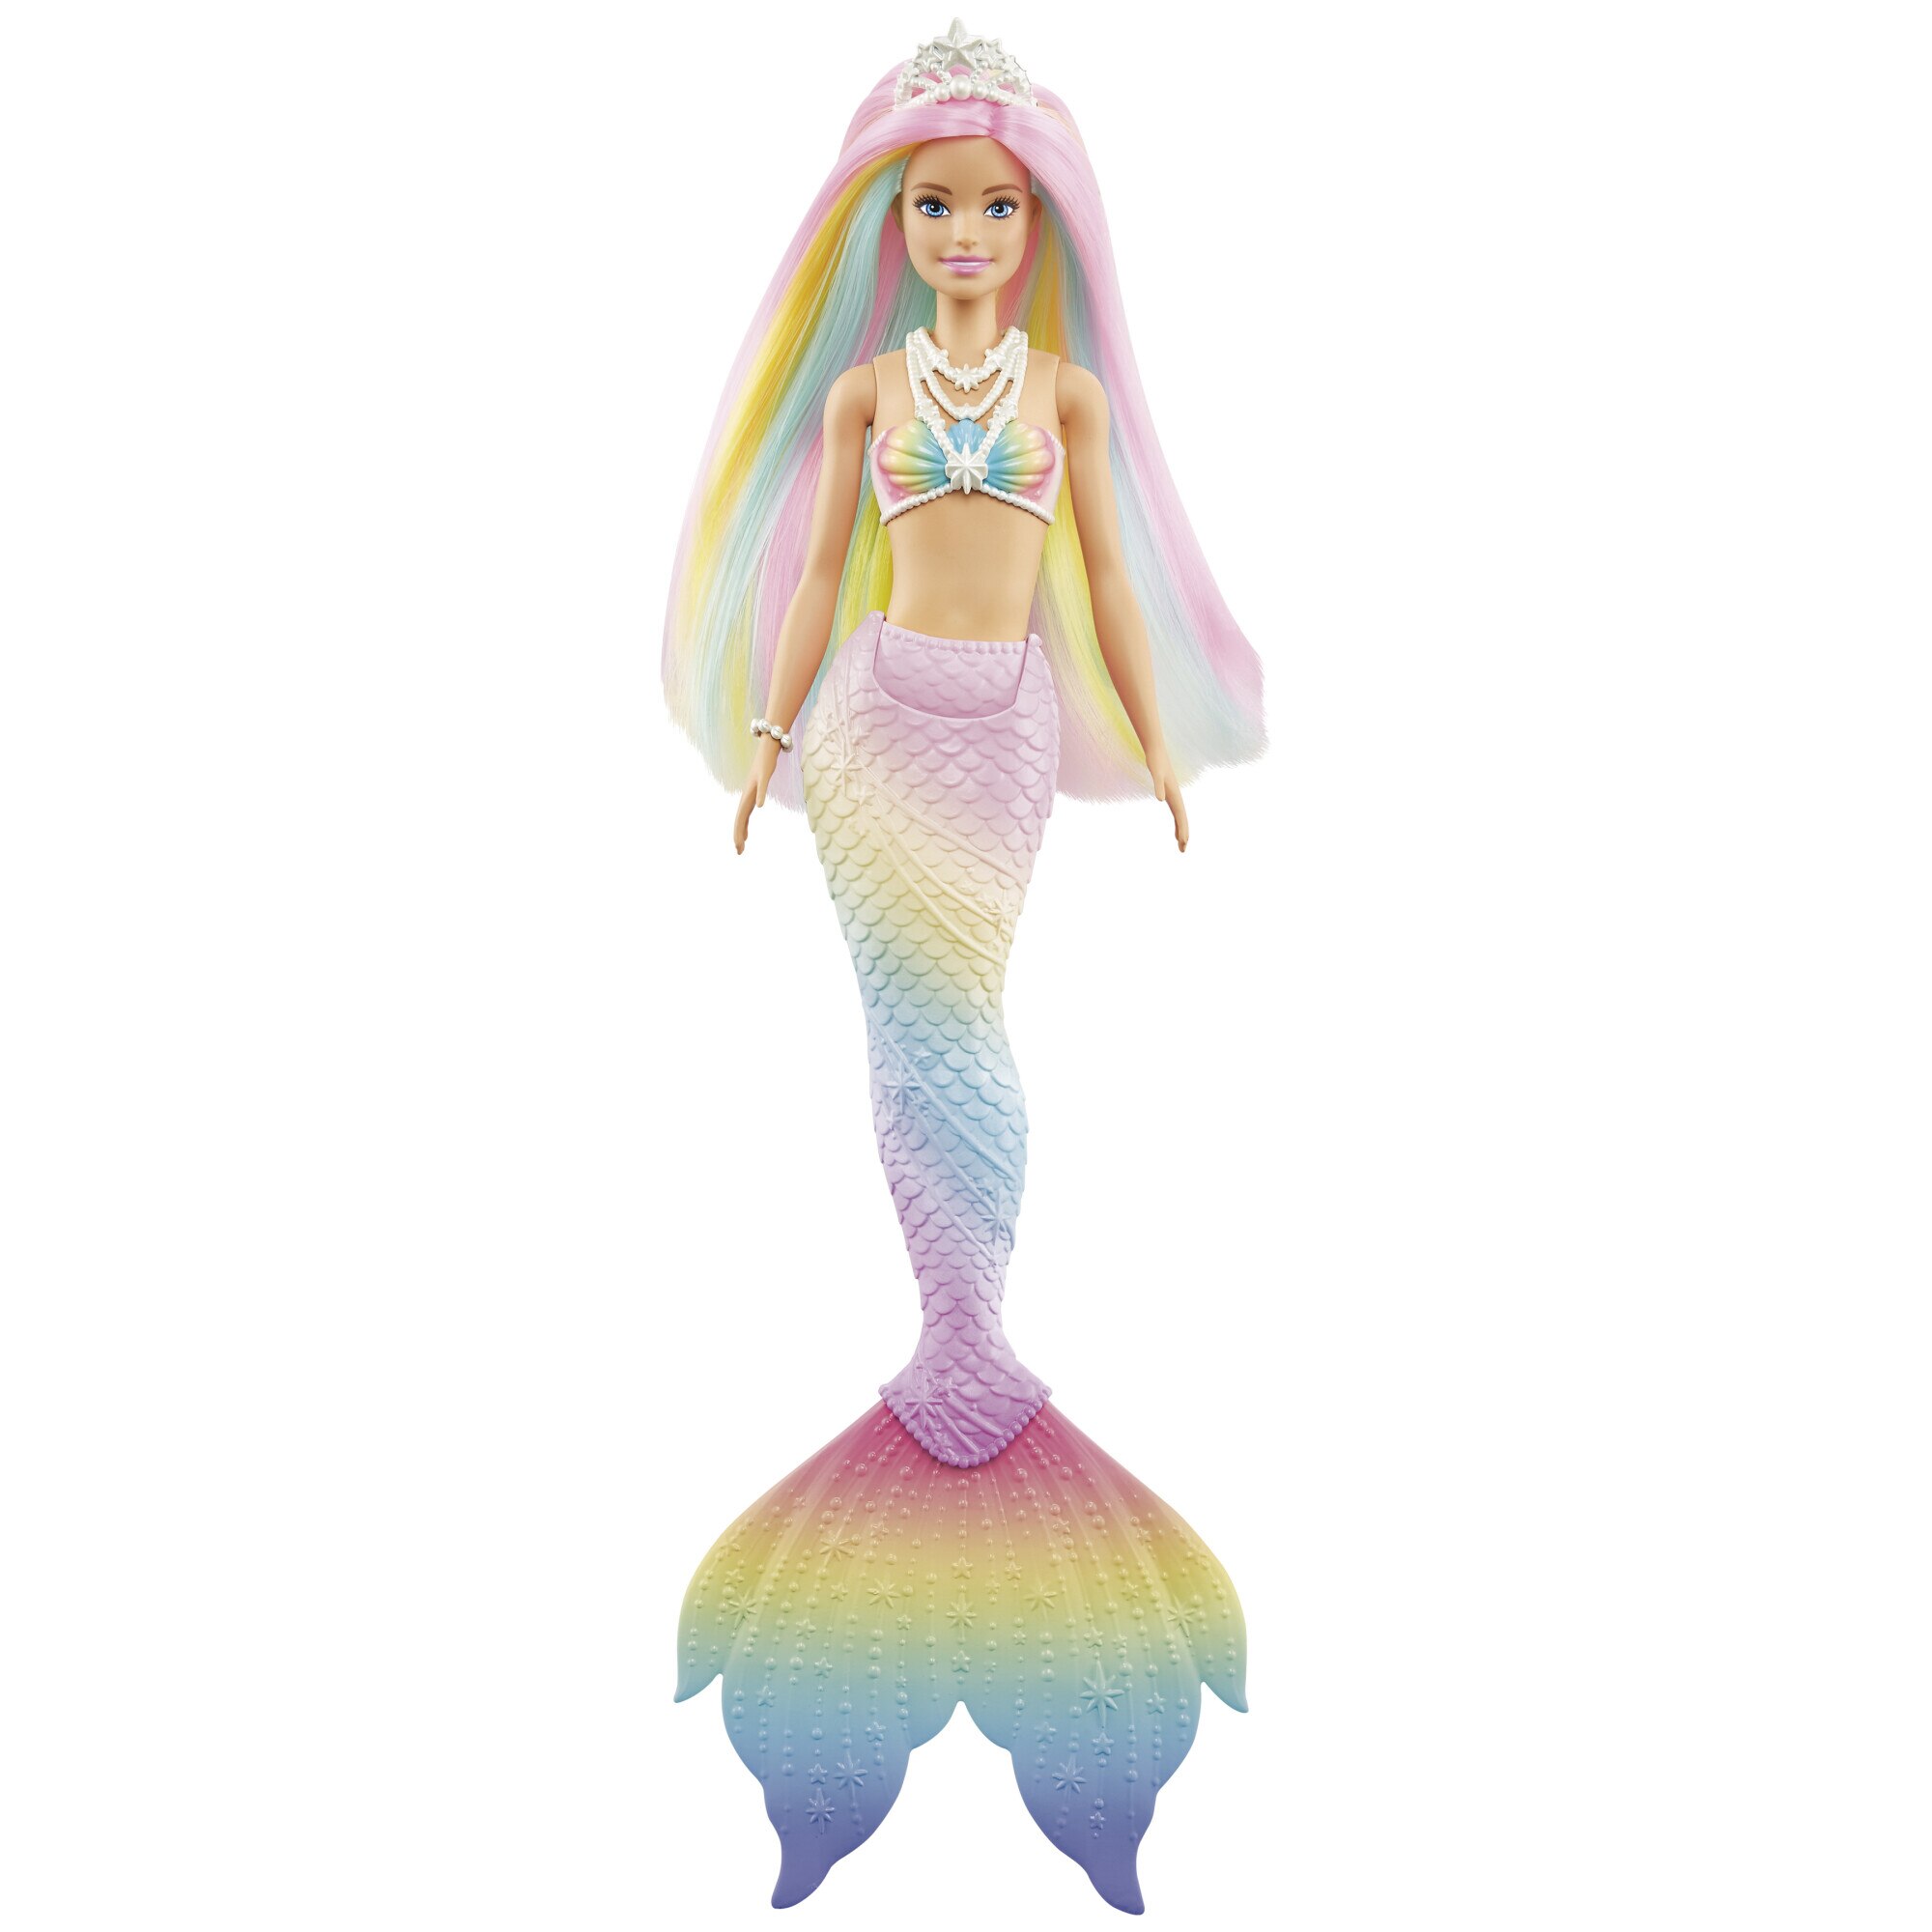 Fotografie Papusa Barbie Dreamtopia - Sirena Rainbow Magic, culori schimbatoare